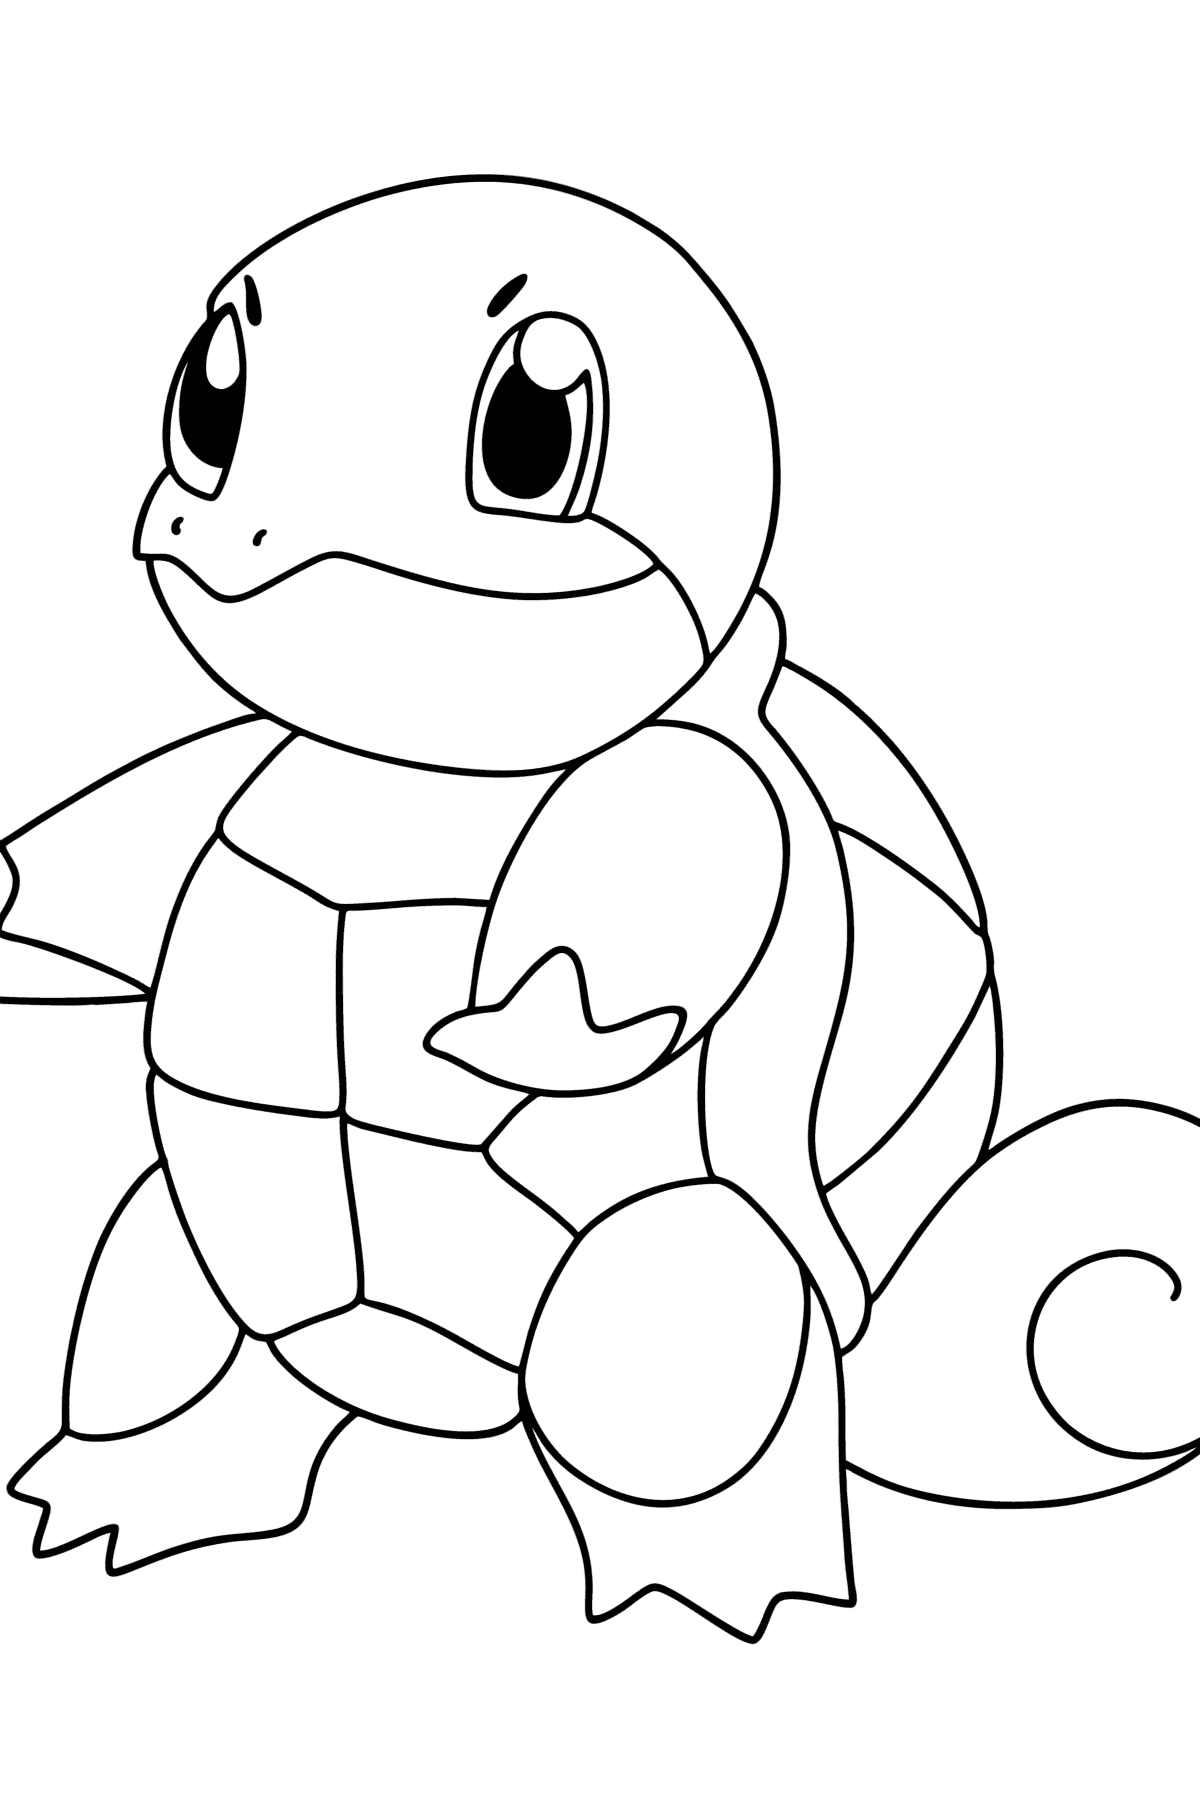 Dibujo de Pokémon Go Squirtle para colorear - Dibujos para Colorear para Niños